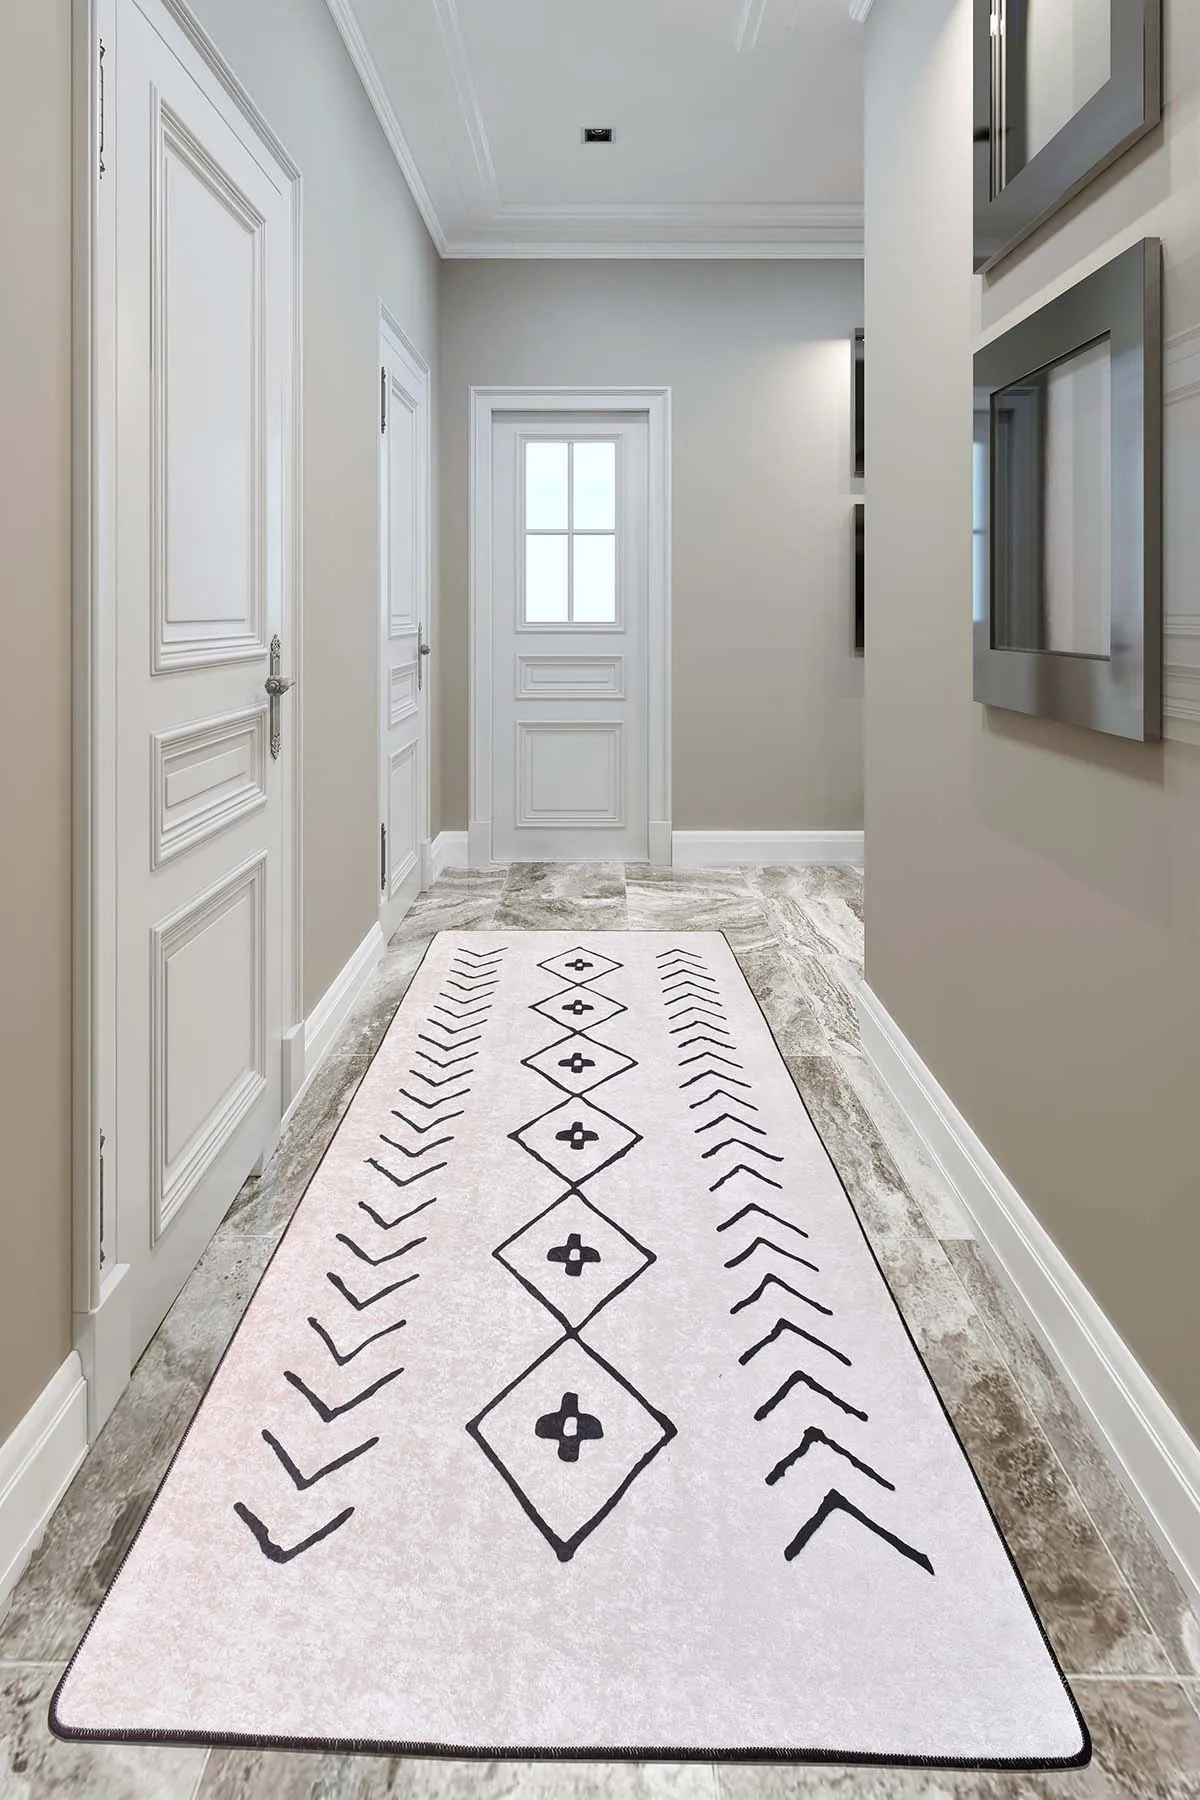 

Fiona Printed Livingroom Area Rugs Hallway Carpet Anti slip Modern Carpet Floor Mat Geometric Kitchen Bedroom Carpet